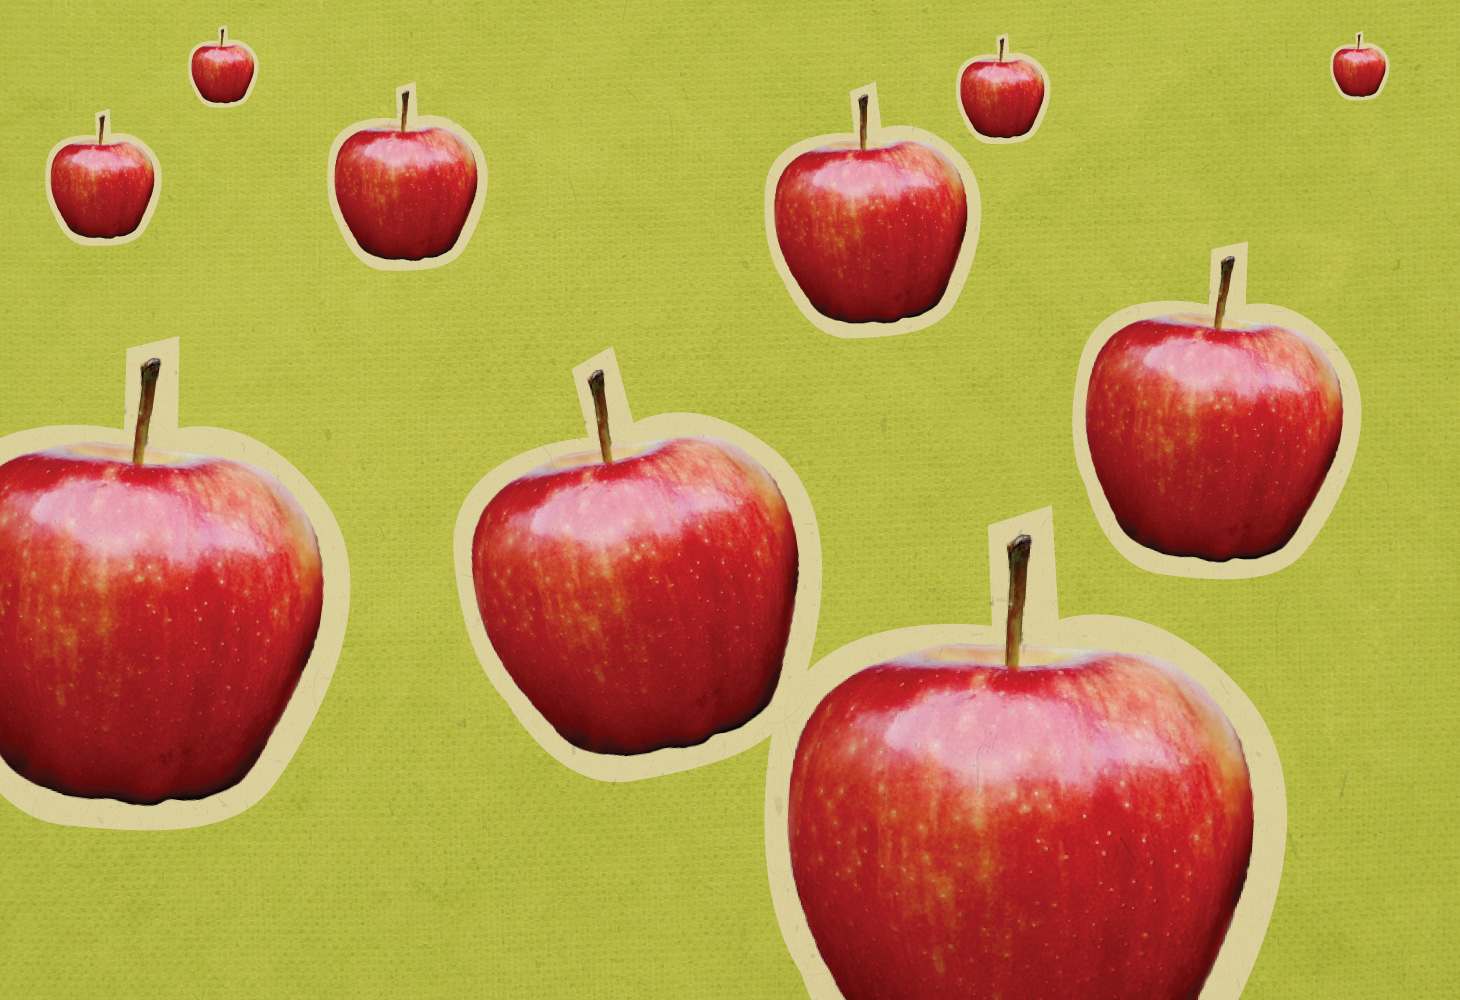 Fruit Salad - Illustrations - Apples